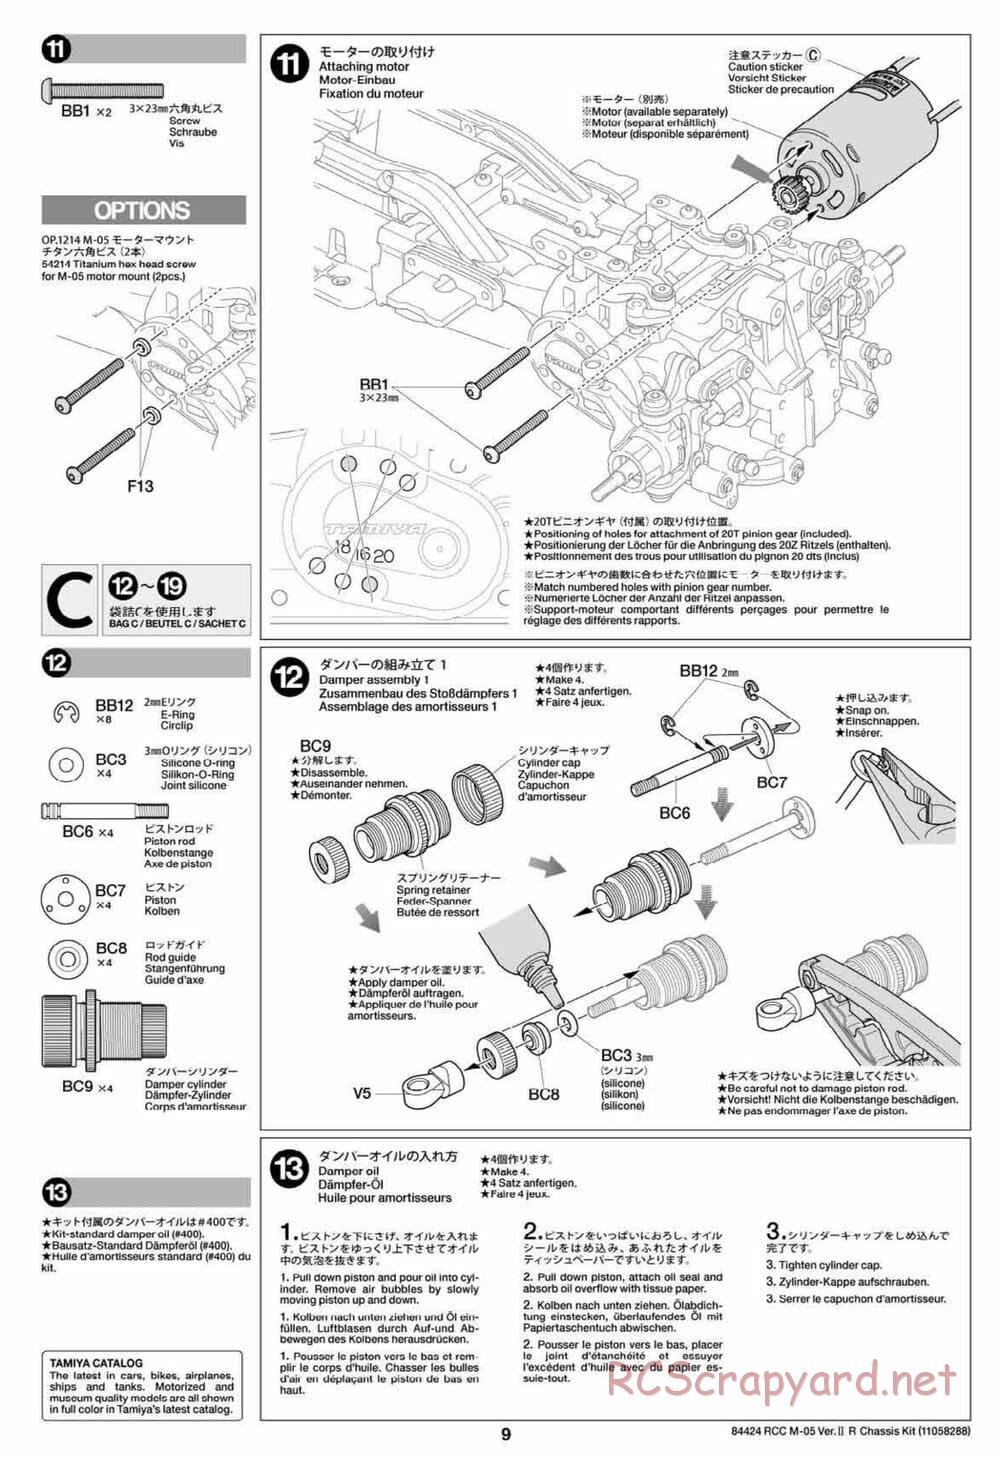 Tamiya - M-05 Ver.II R Chassis Chassis - Manual - Page 9